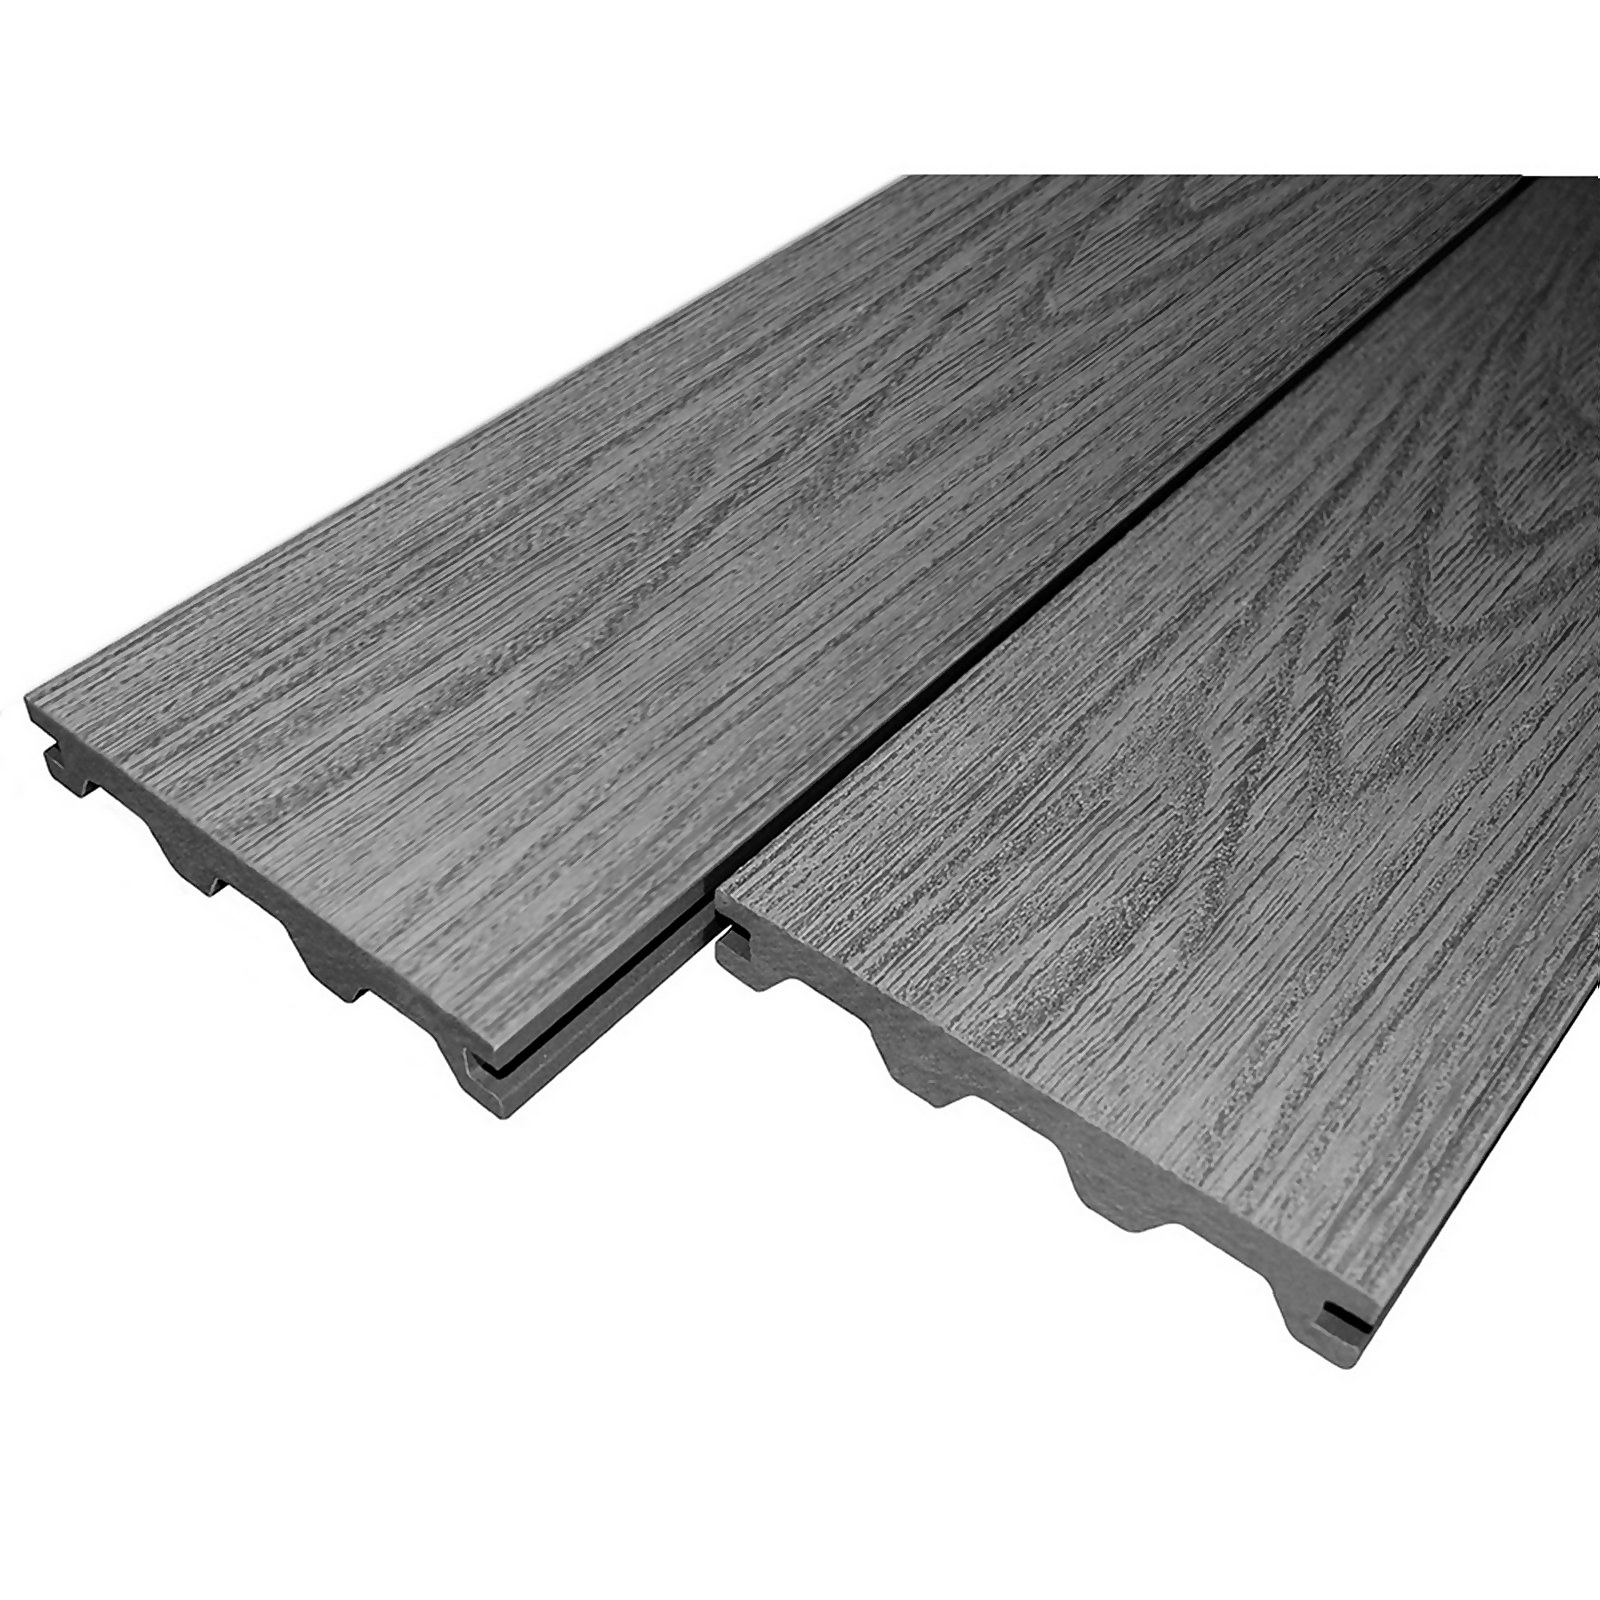 Photo of Victoria Composite Decking Woodgrain 30 Pack Grey - 15.12 M2